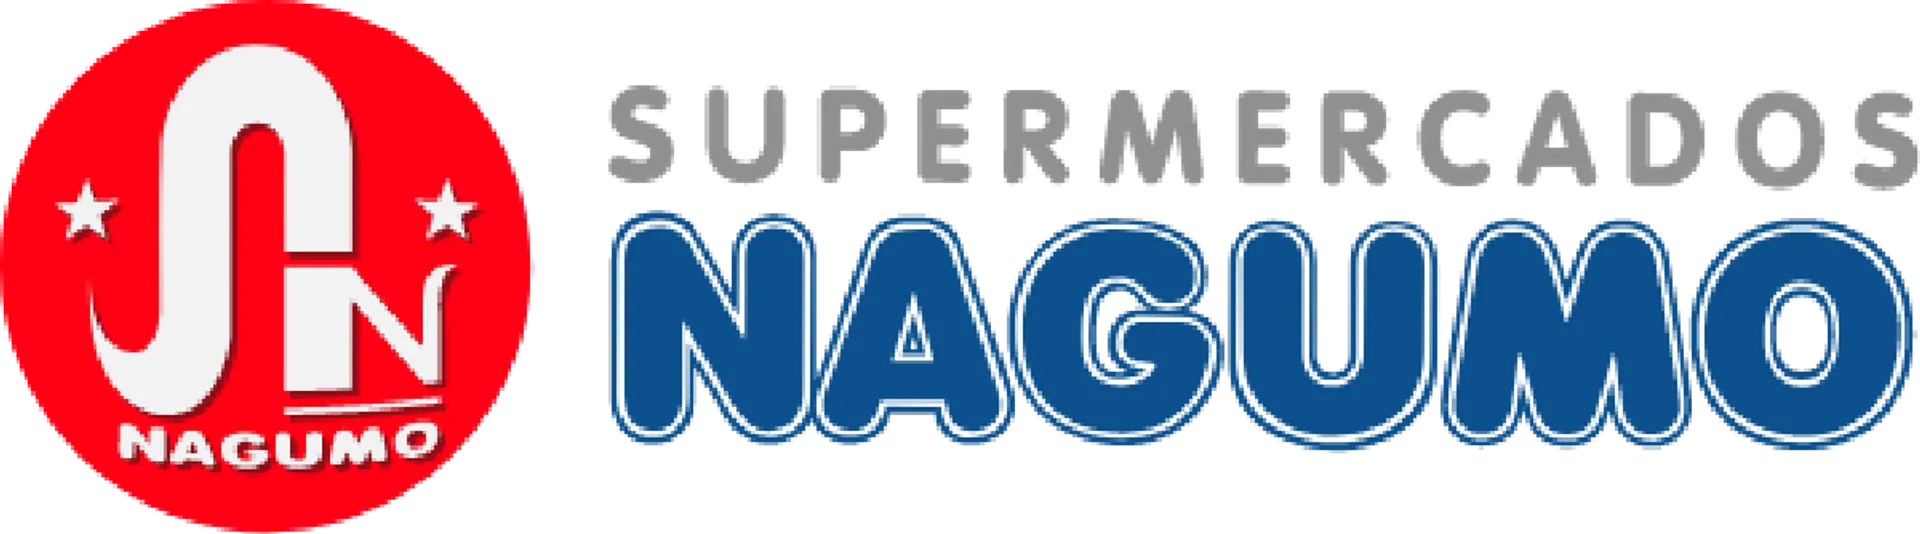 NAGUMO logo